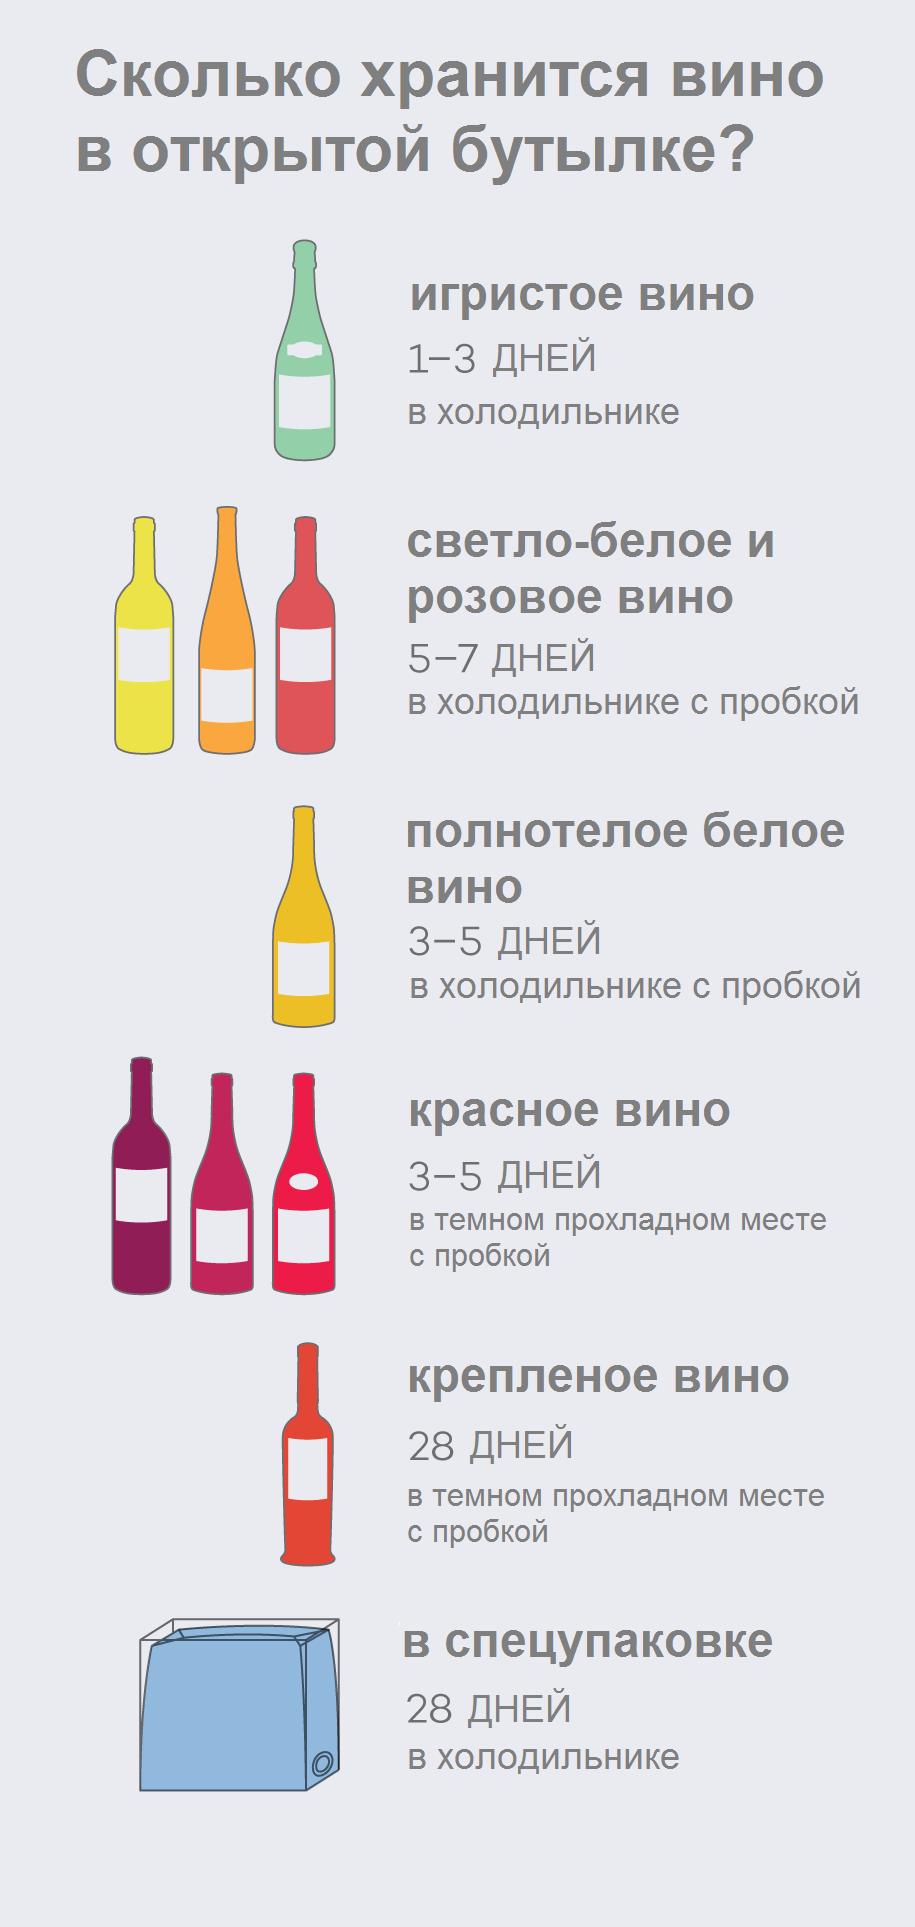 Правила хранения вина в домашних условиях для сохранения вкуса и аромата